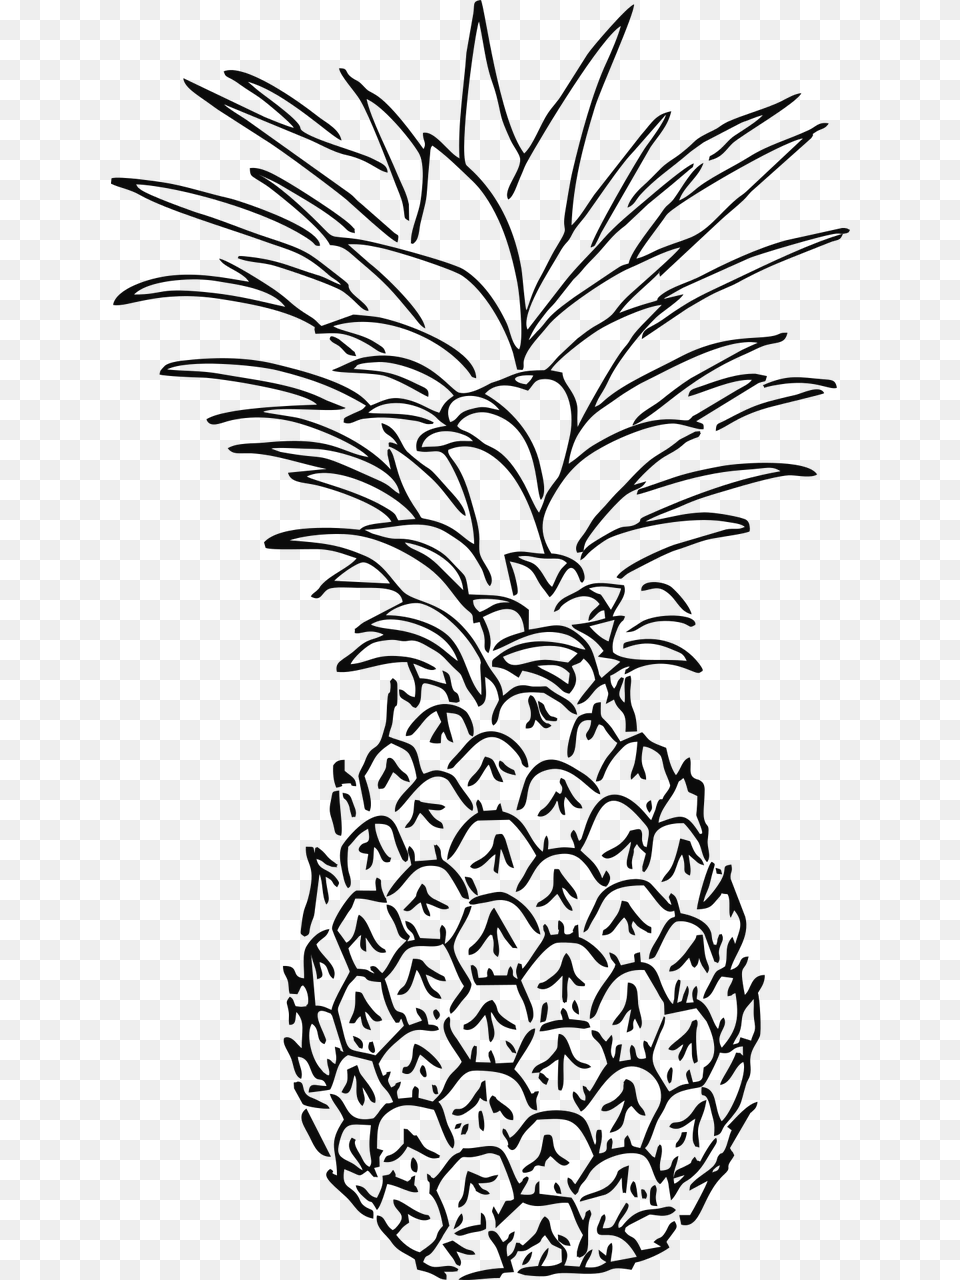 Im Genes De Pi As Para Colorear Decorar Y Cuadros Chulos Pineapple Drawing, Food, Fruit, Plant, Produce Free Transparent Png